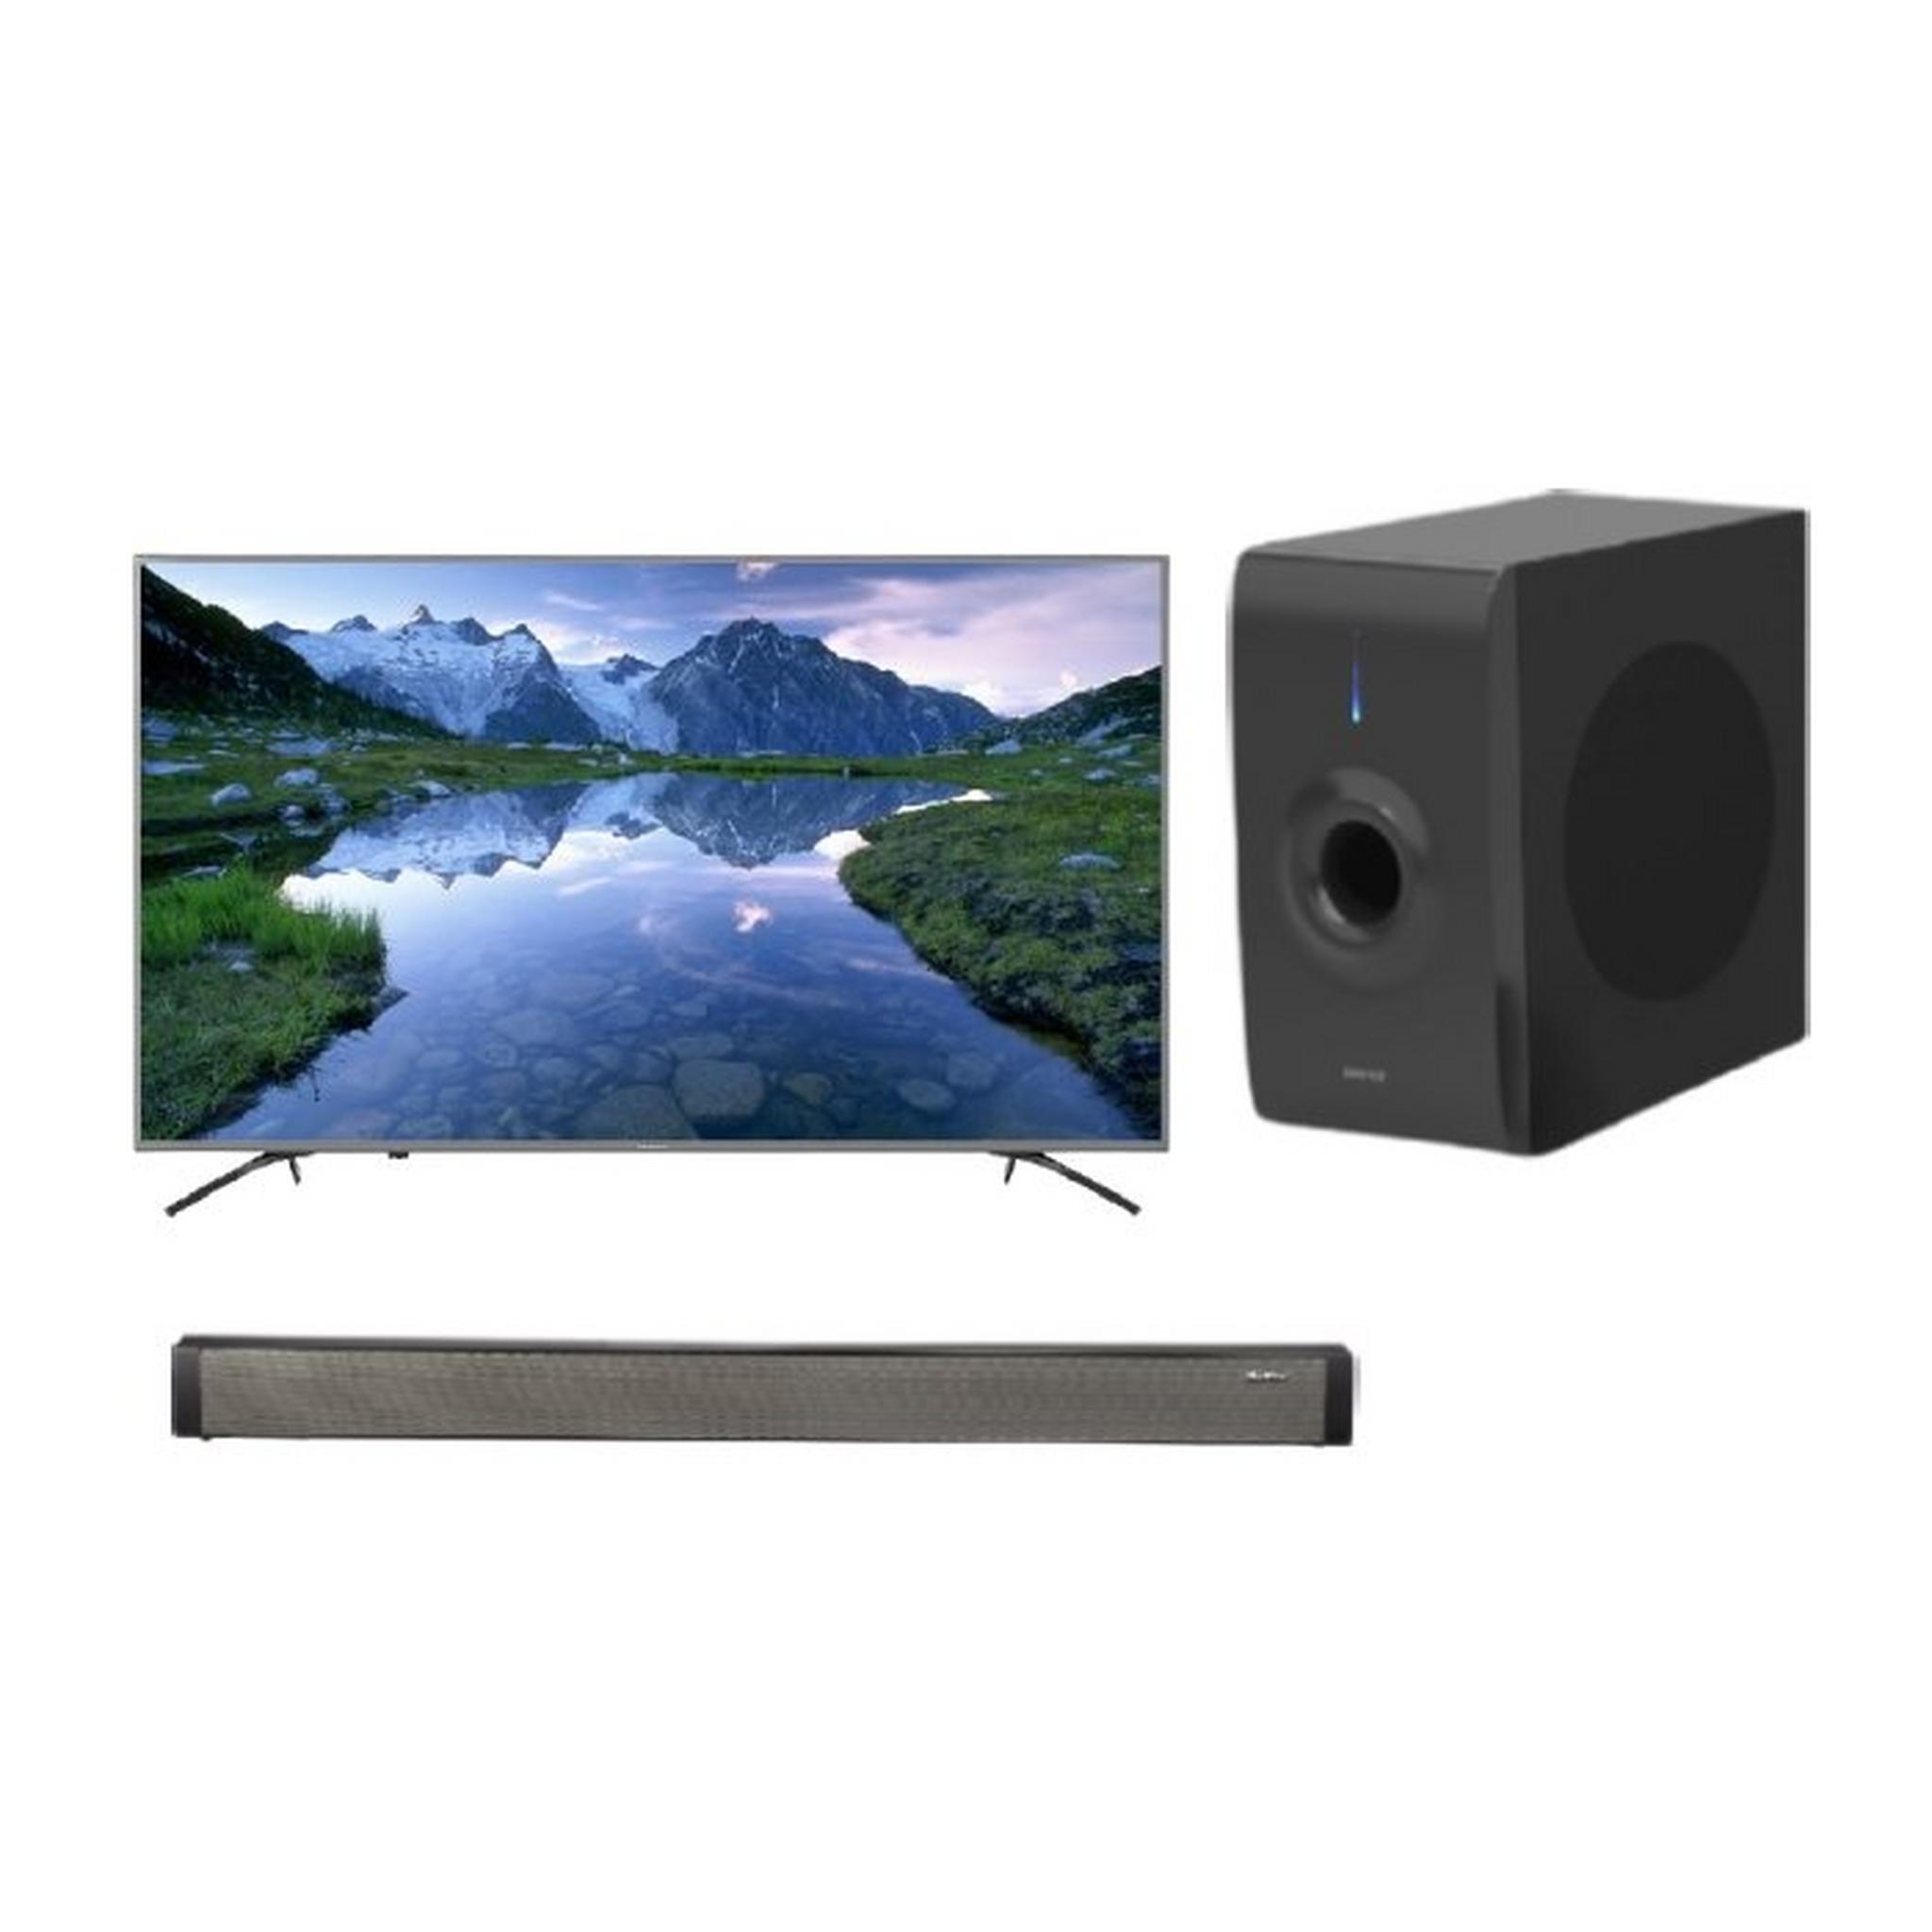 Hisense TV 55-inch UHD Smart LED - 55B7200UW + Wansa Soundbar 30W (LY-S218W) + Wansa Subwoofer 30W (LY-S218W)